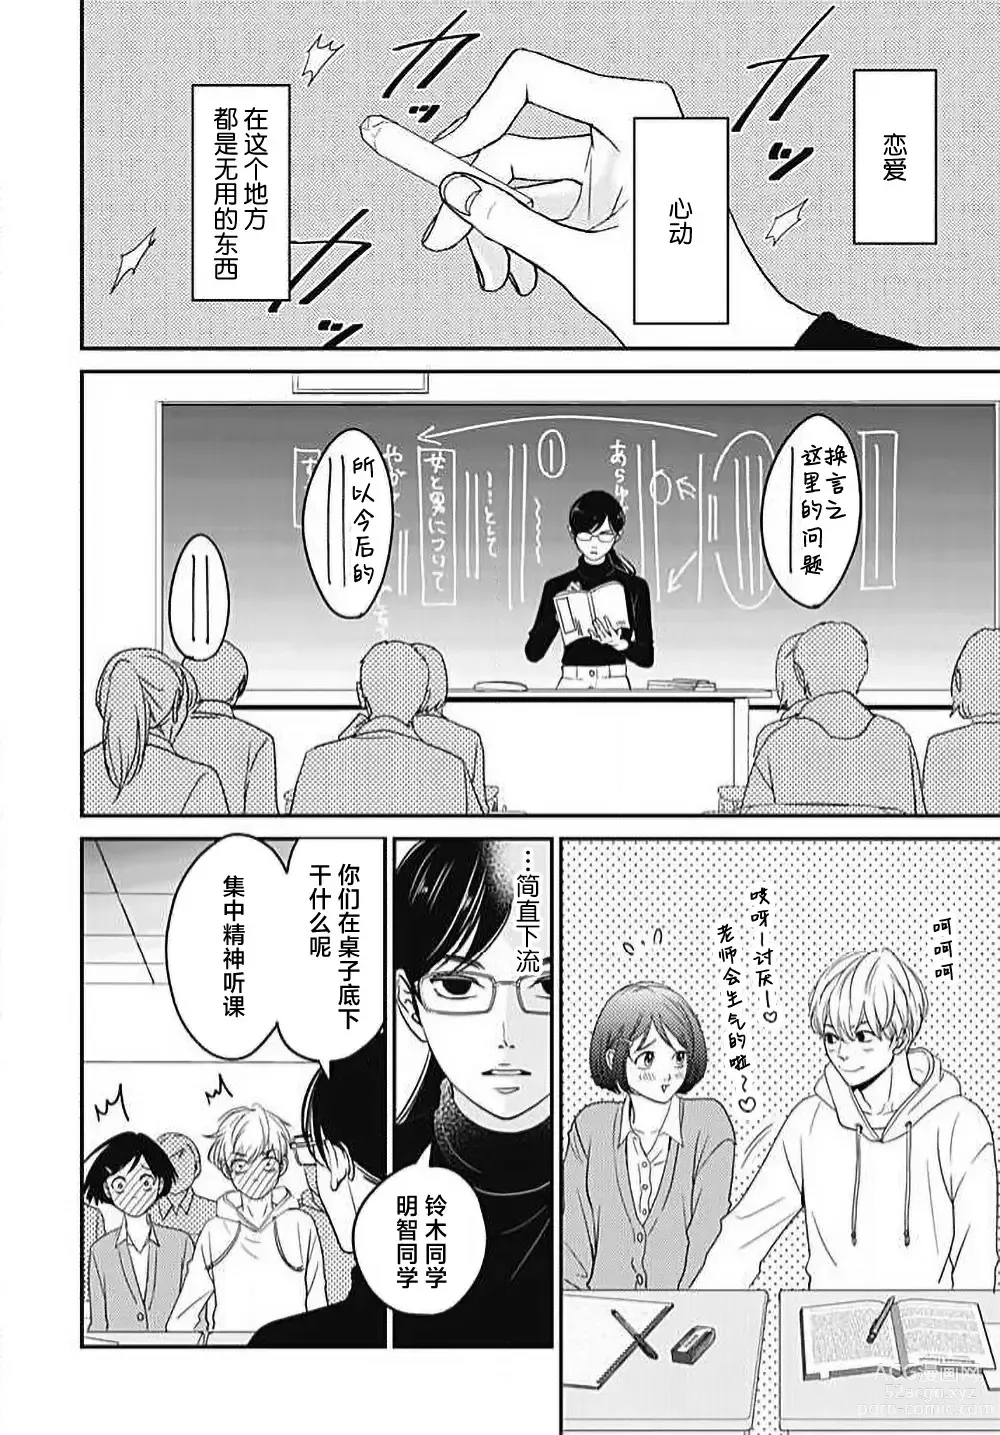 Page 4 of manga 今夜、于保健室甜蜜融化 1-5